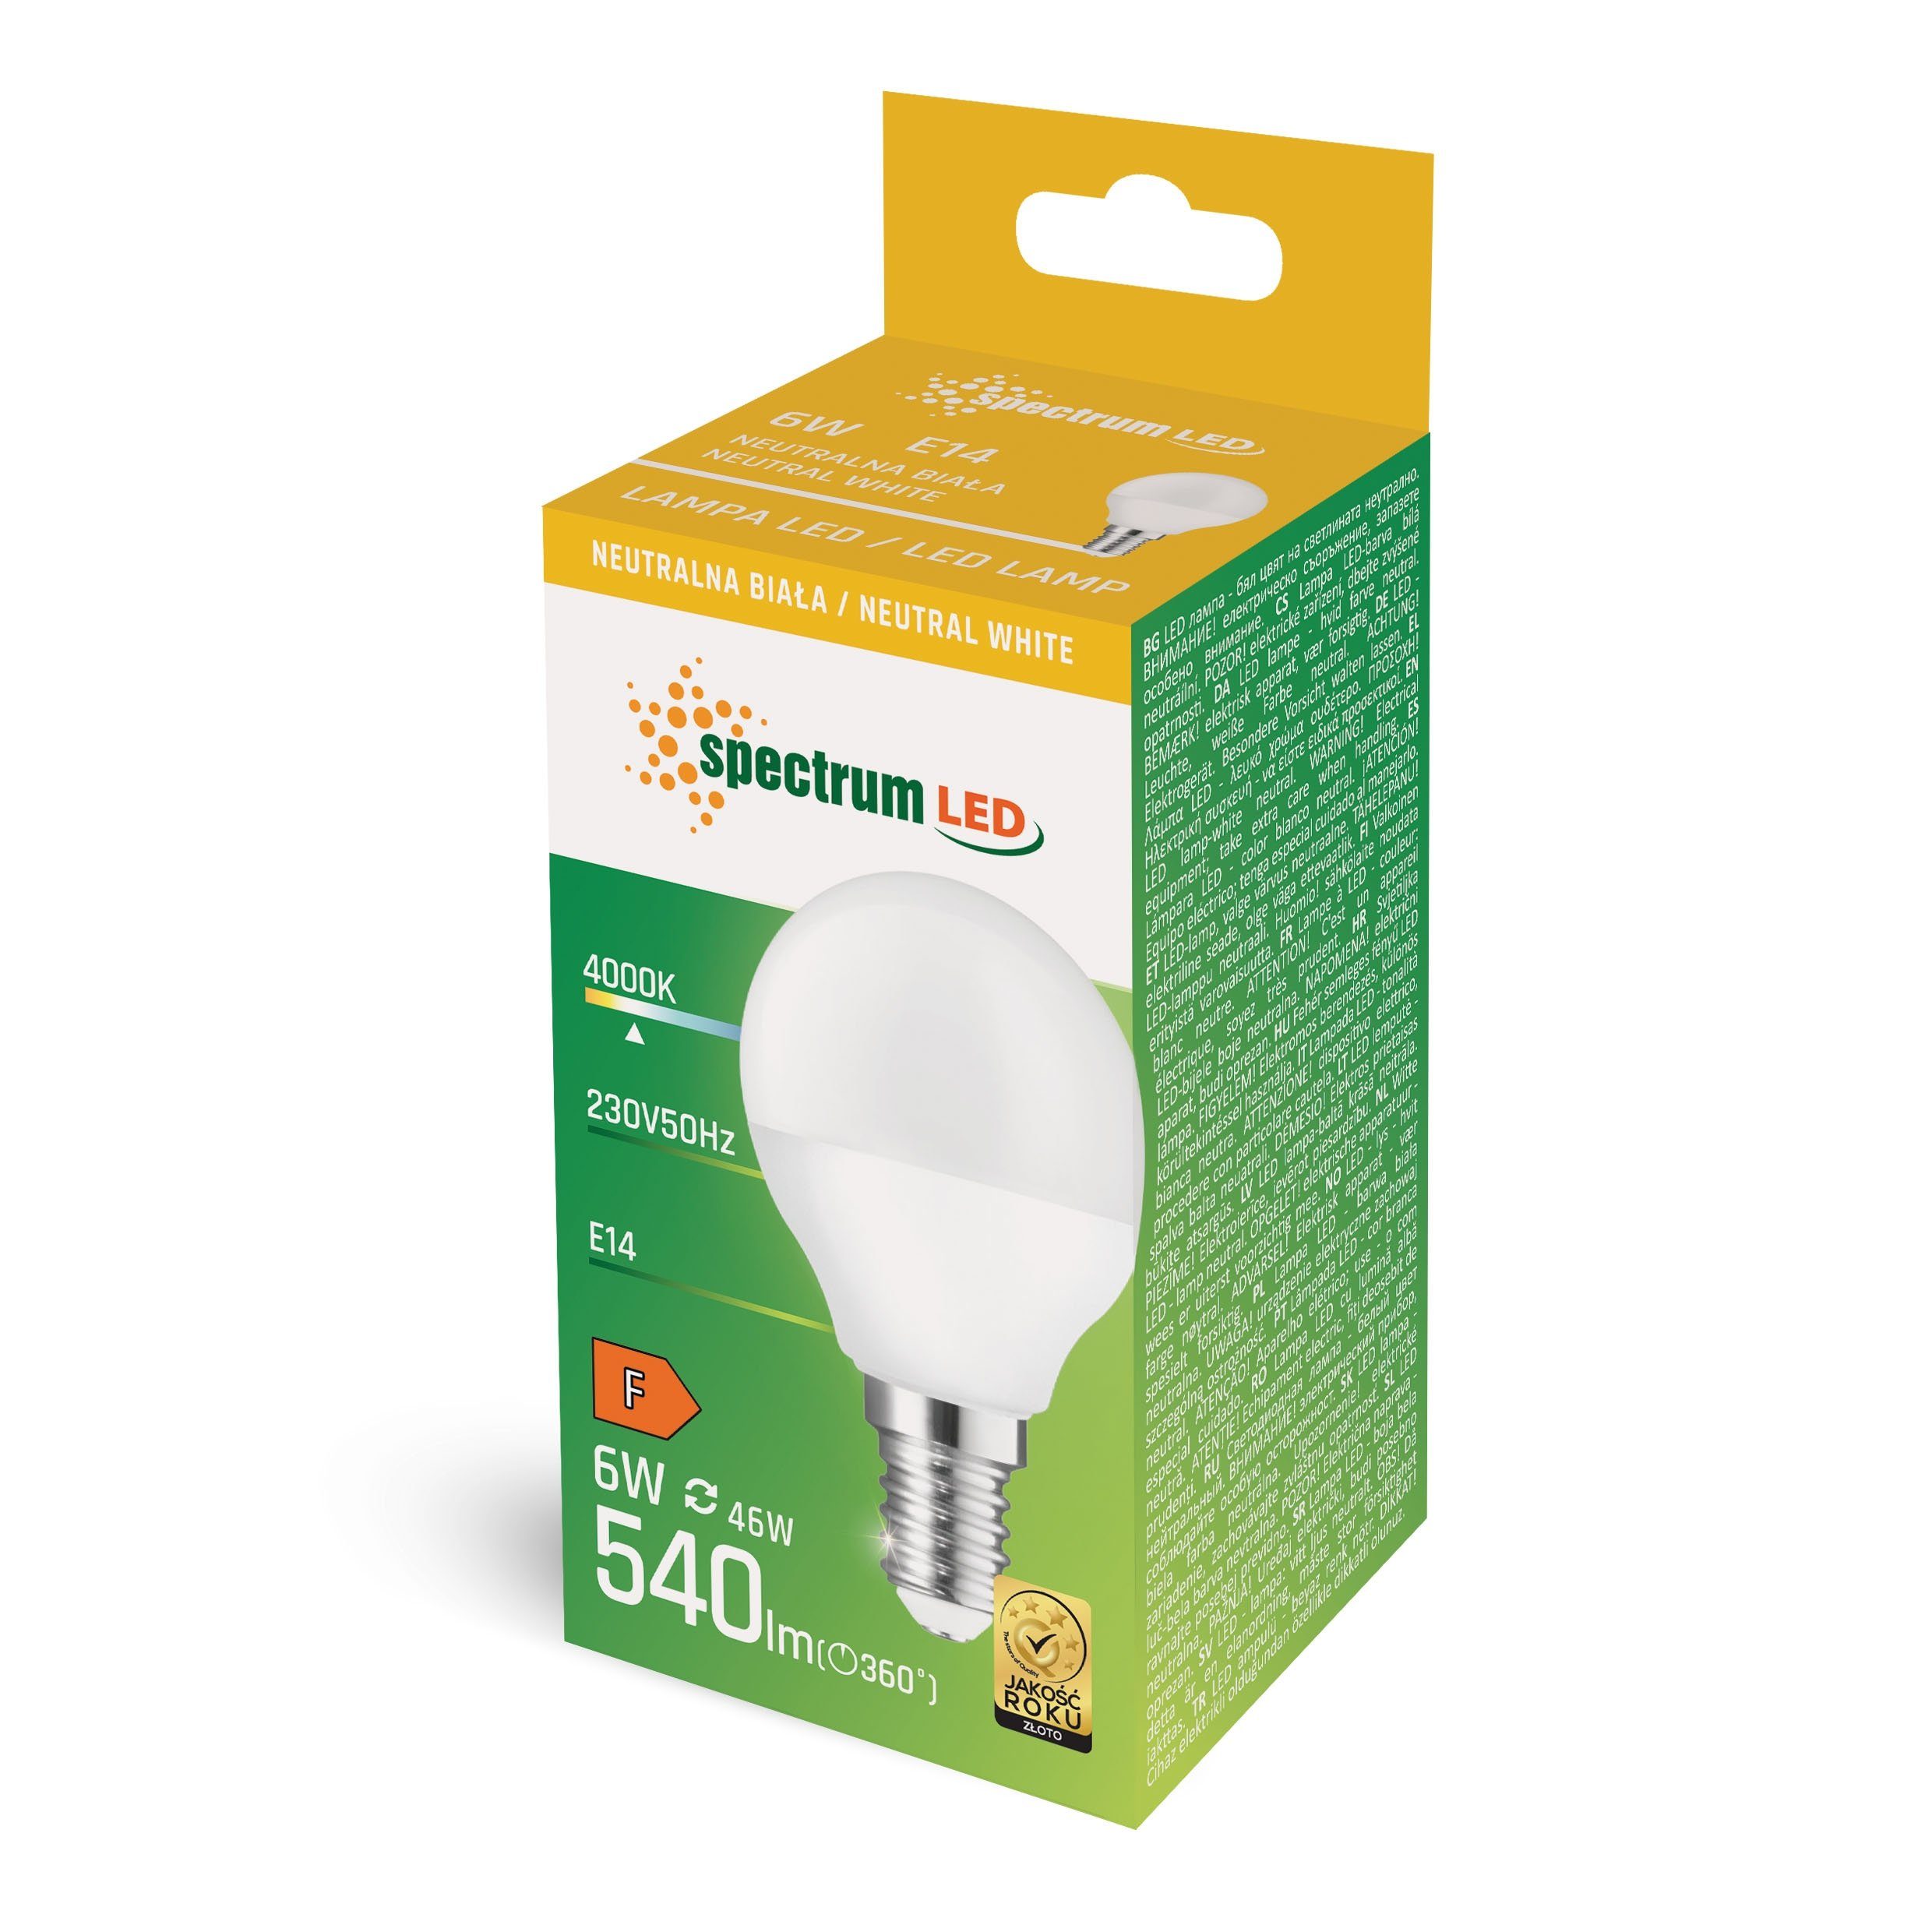 Tropfenform LED Neutralweiß G45 spectrum E14, Neutralweiß LED-Leuchtmittel 540lm 230V 160° E14 4000K, 6W 46W = LED